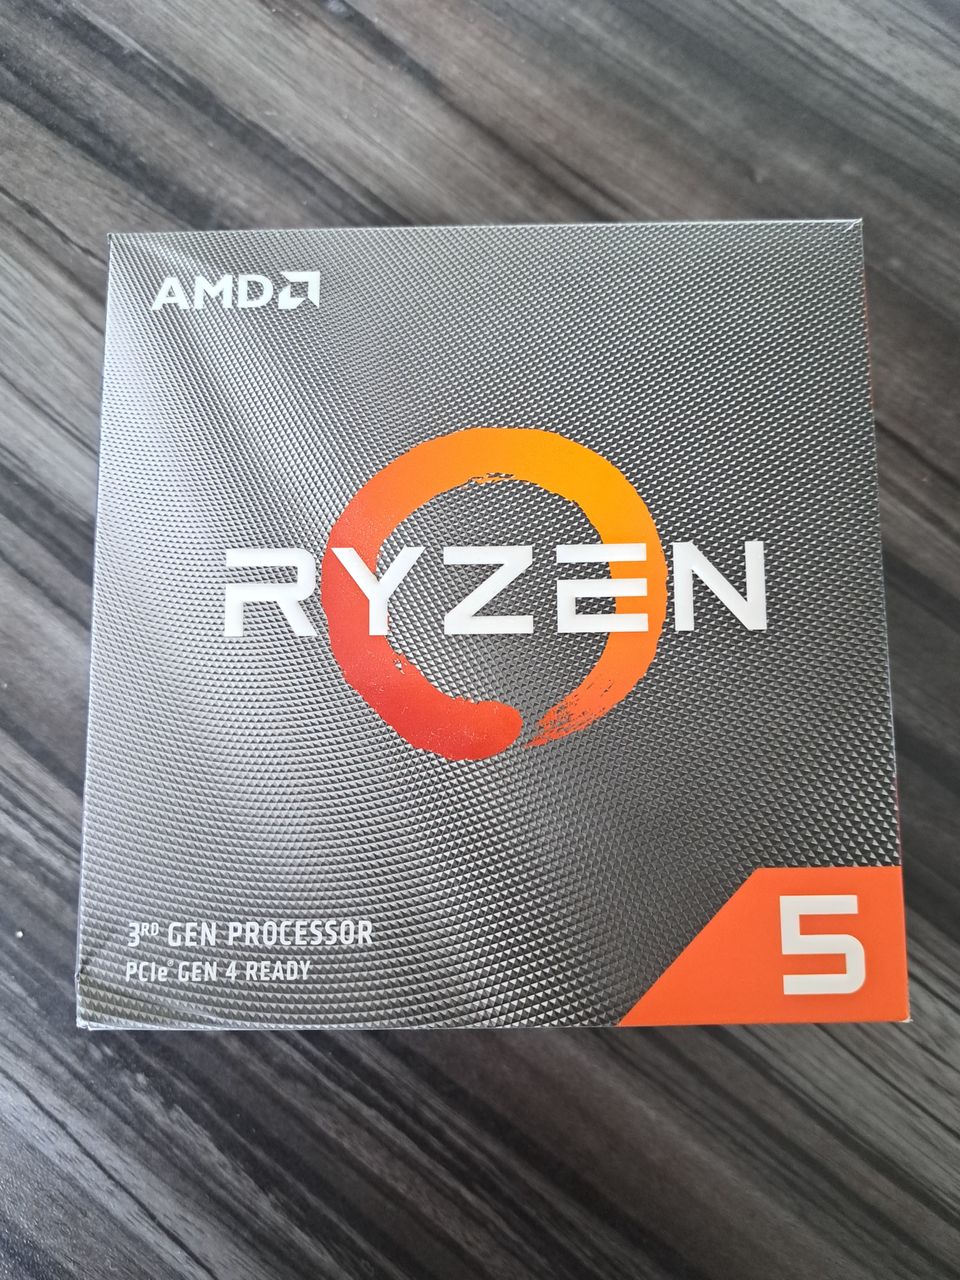 Prosessori AMD Ryzen 5 3600